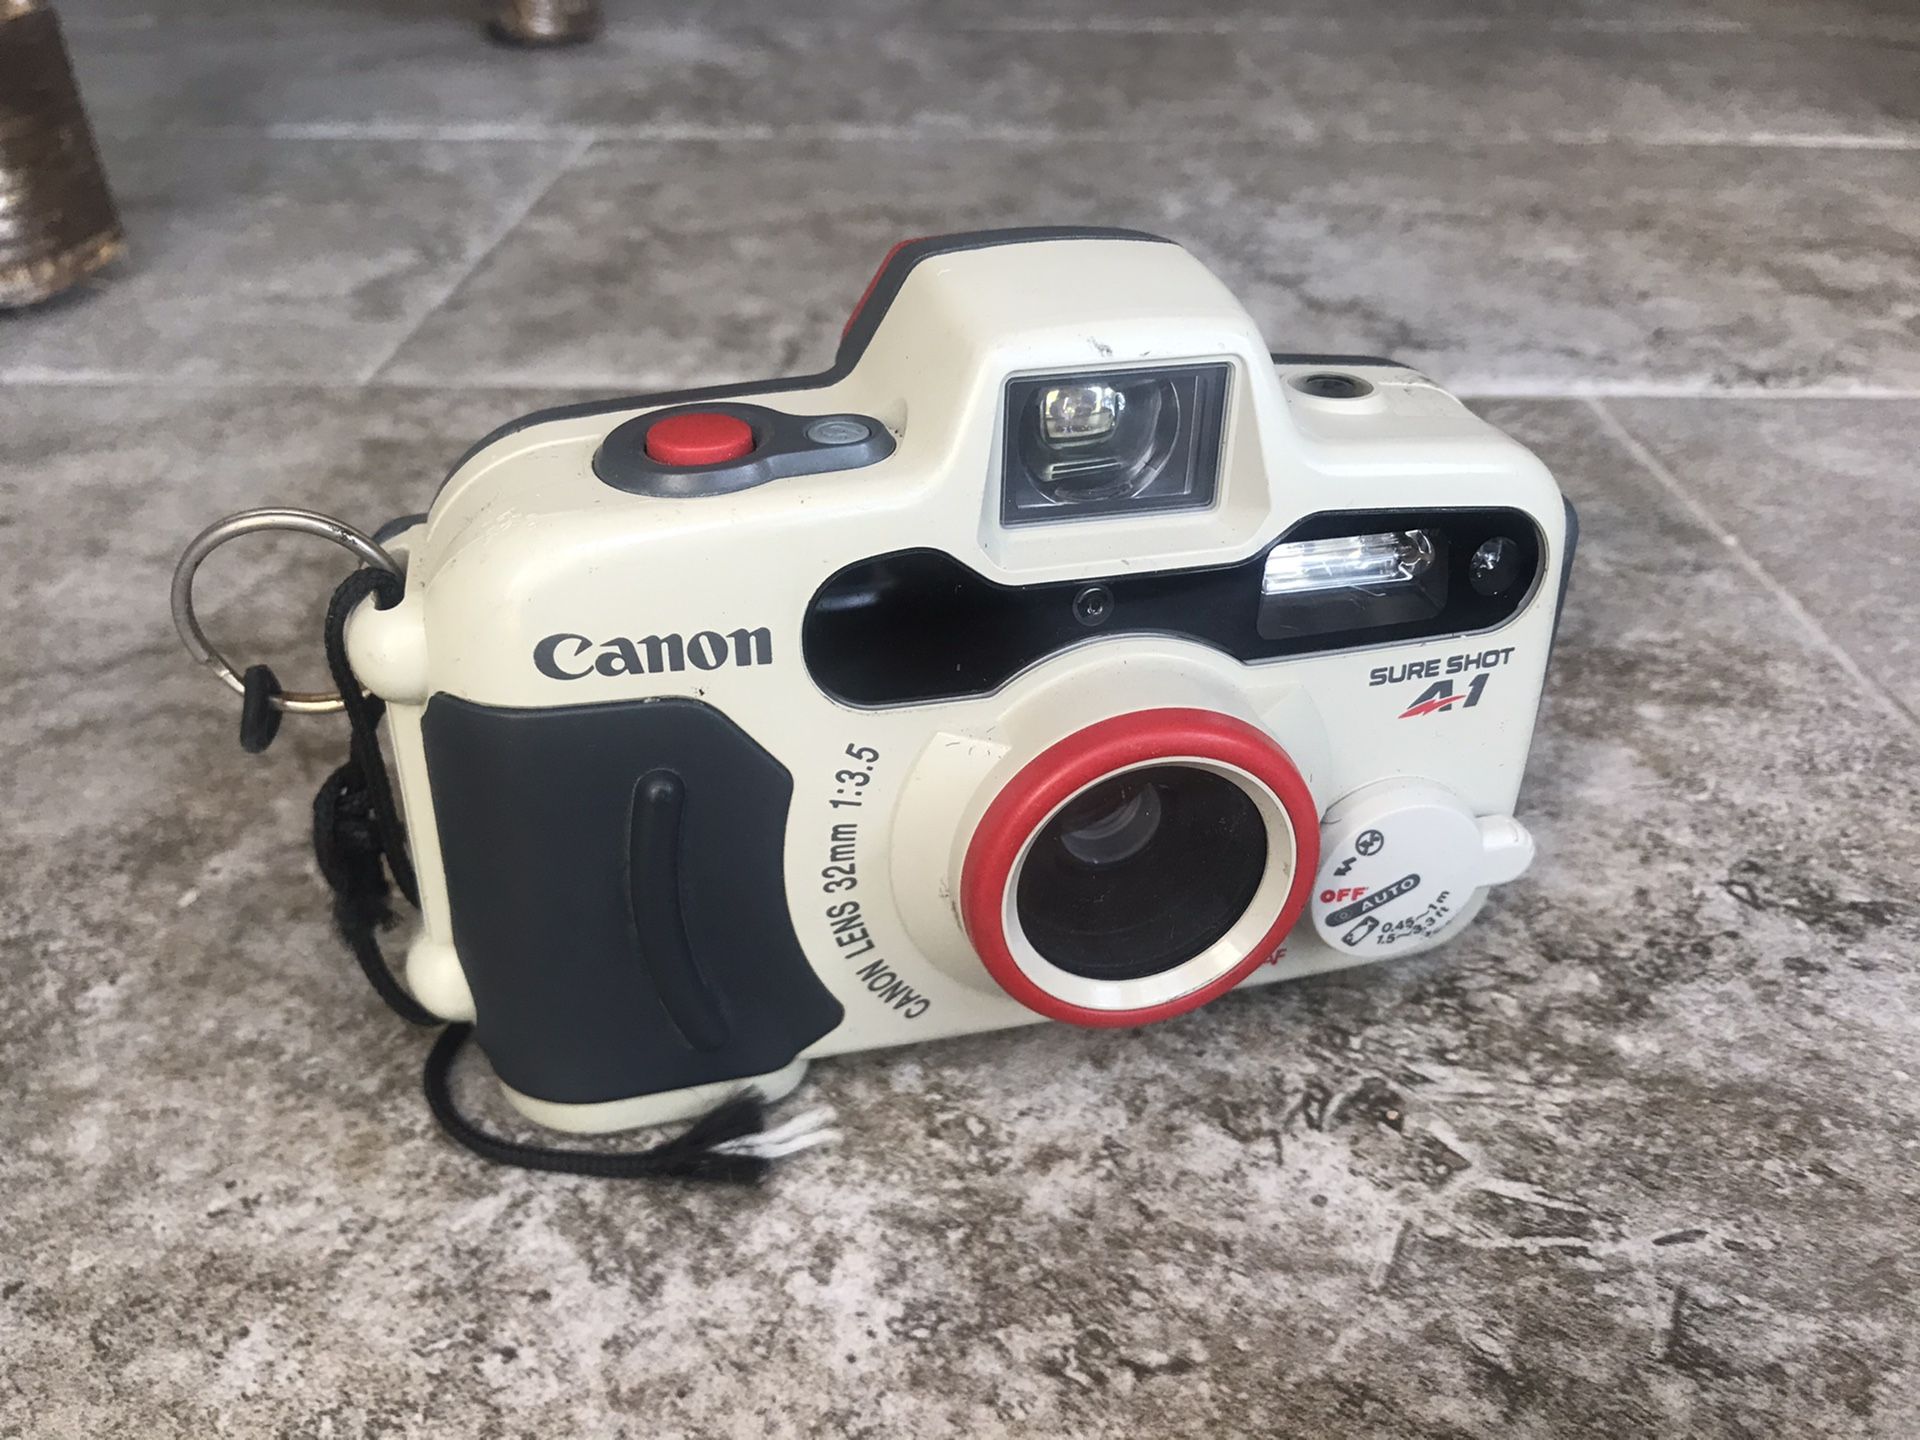 Canon sure shot a one underwater camera